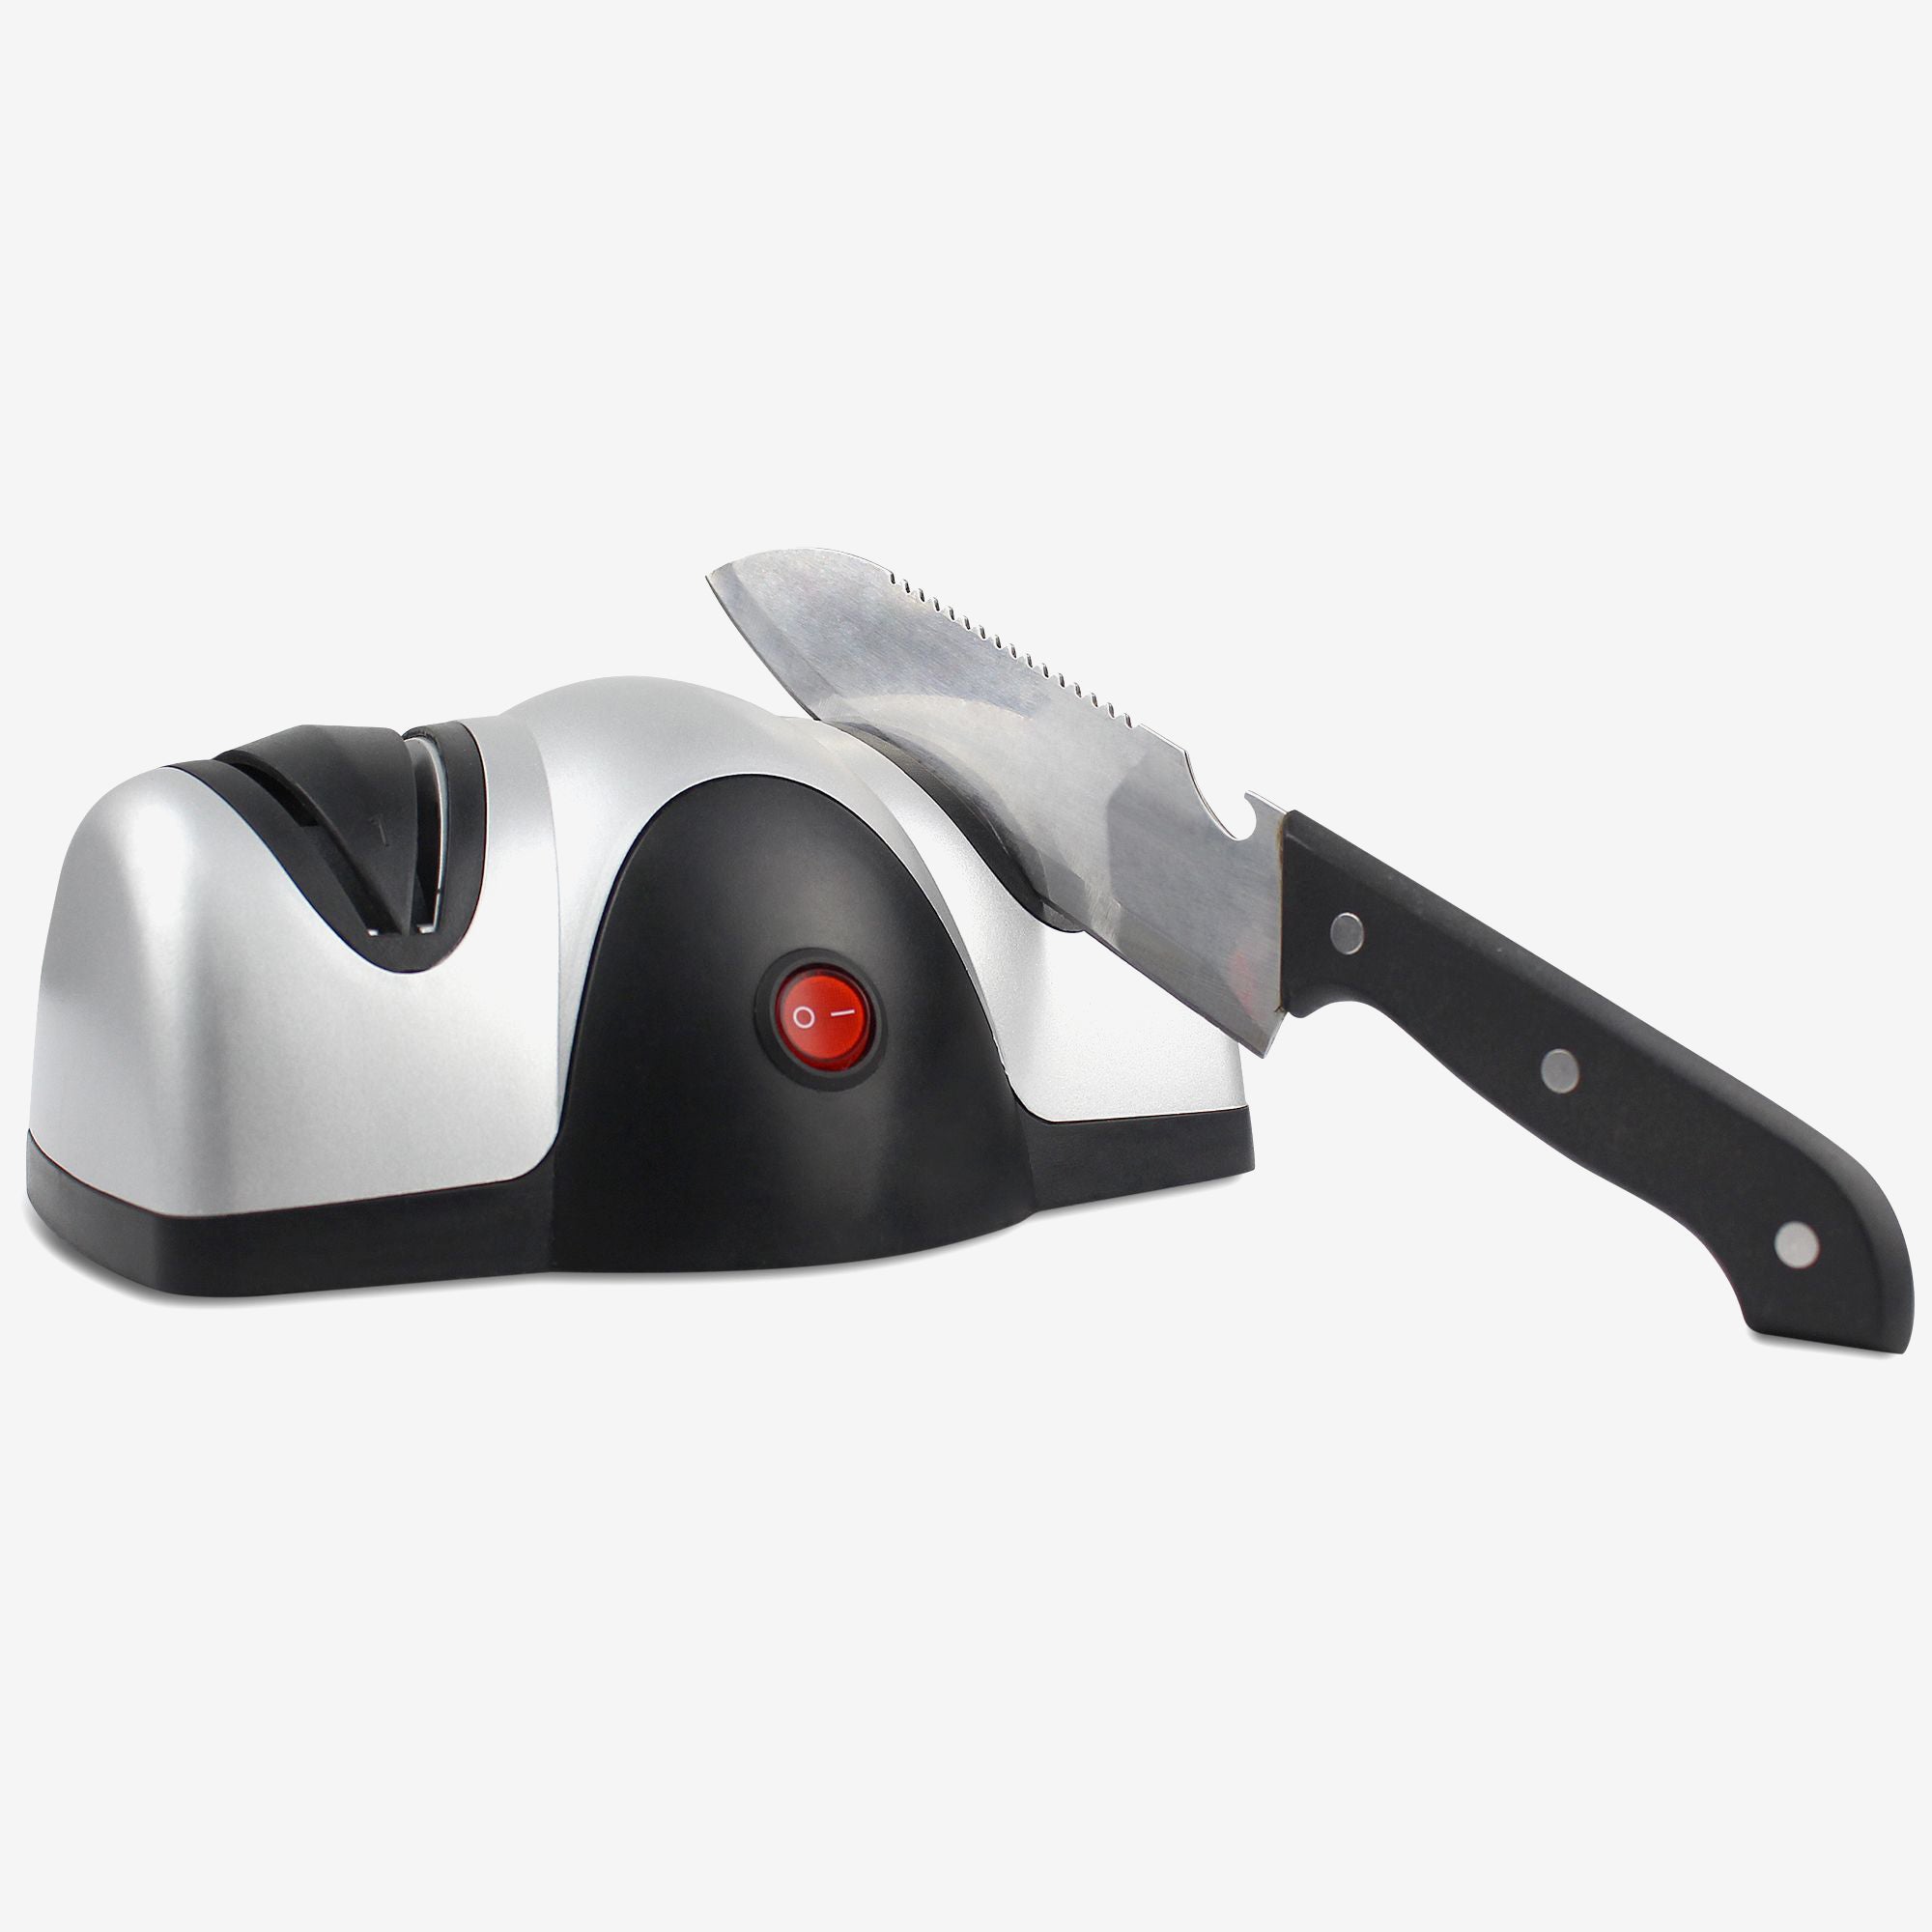 Electric-Knife-Sharpener-Two-Level-Sharpener-Black-Silver-Material-ABS-Plastic